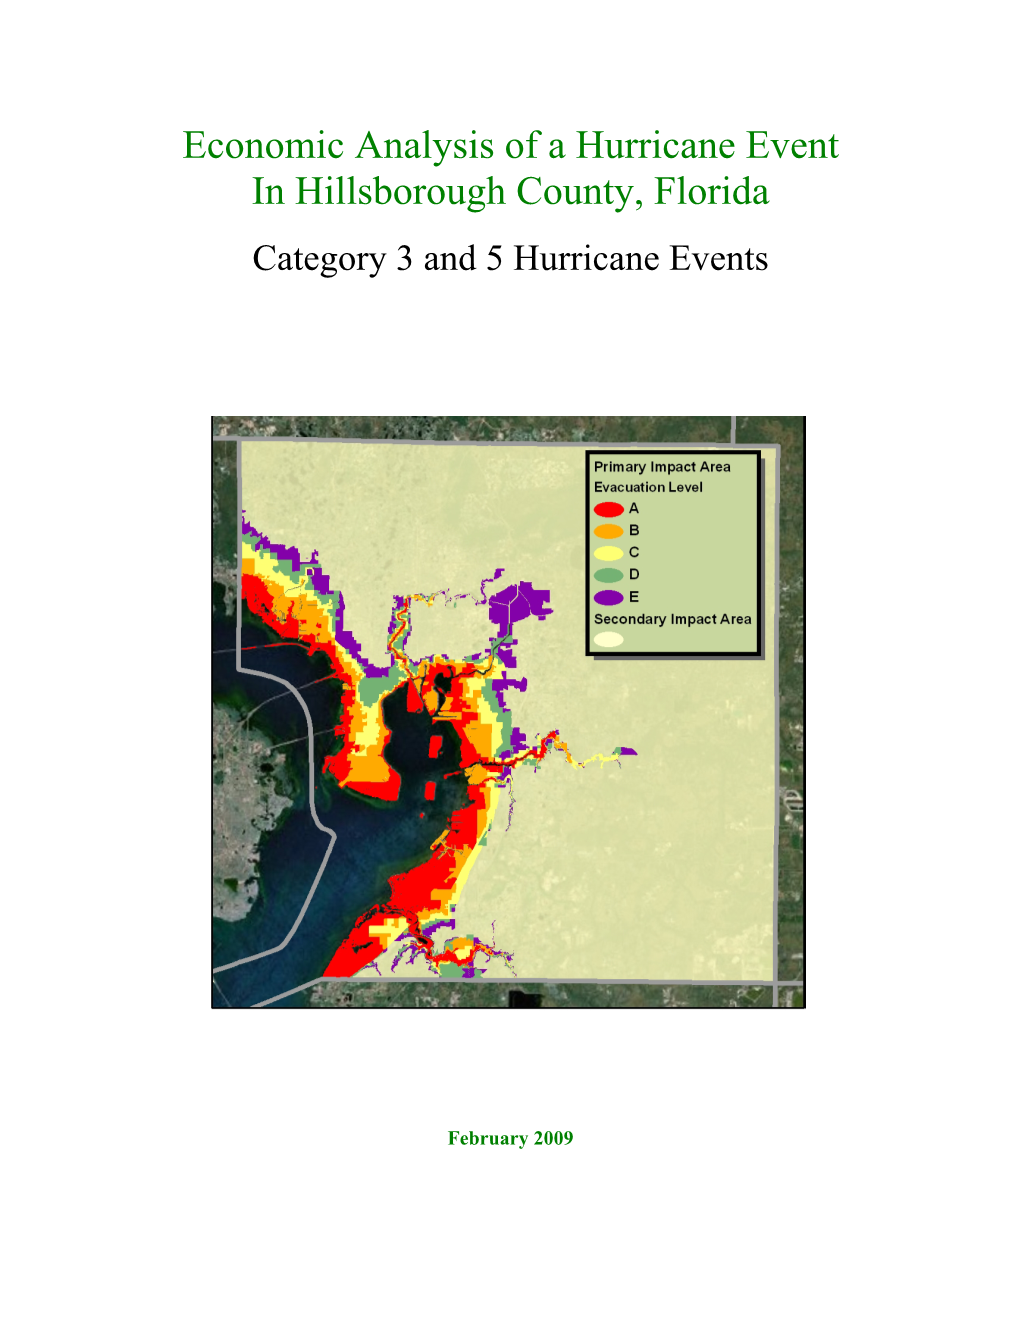 Economic Analysis of a Hurricane Event in Hillsborough County, Florida